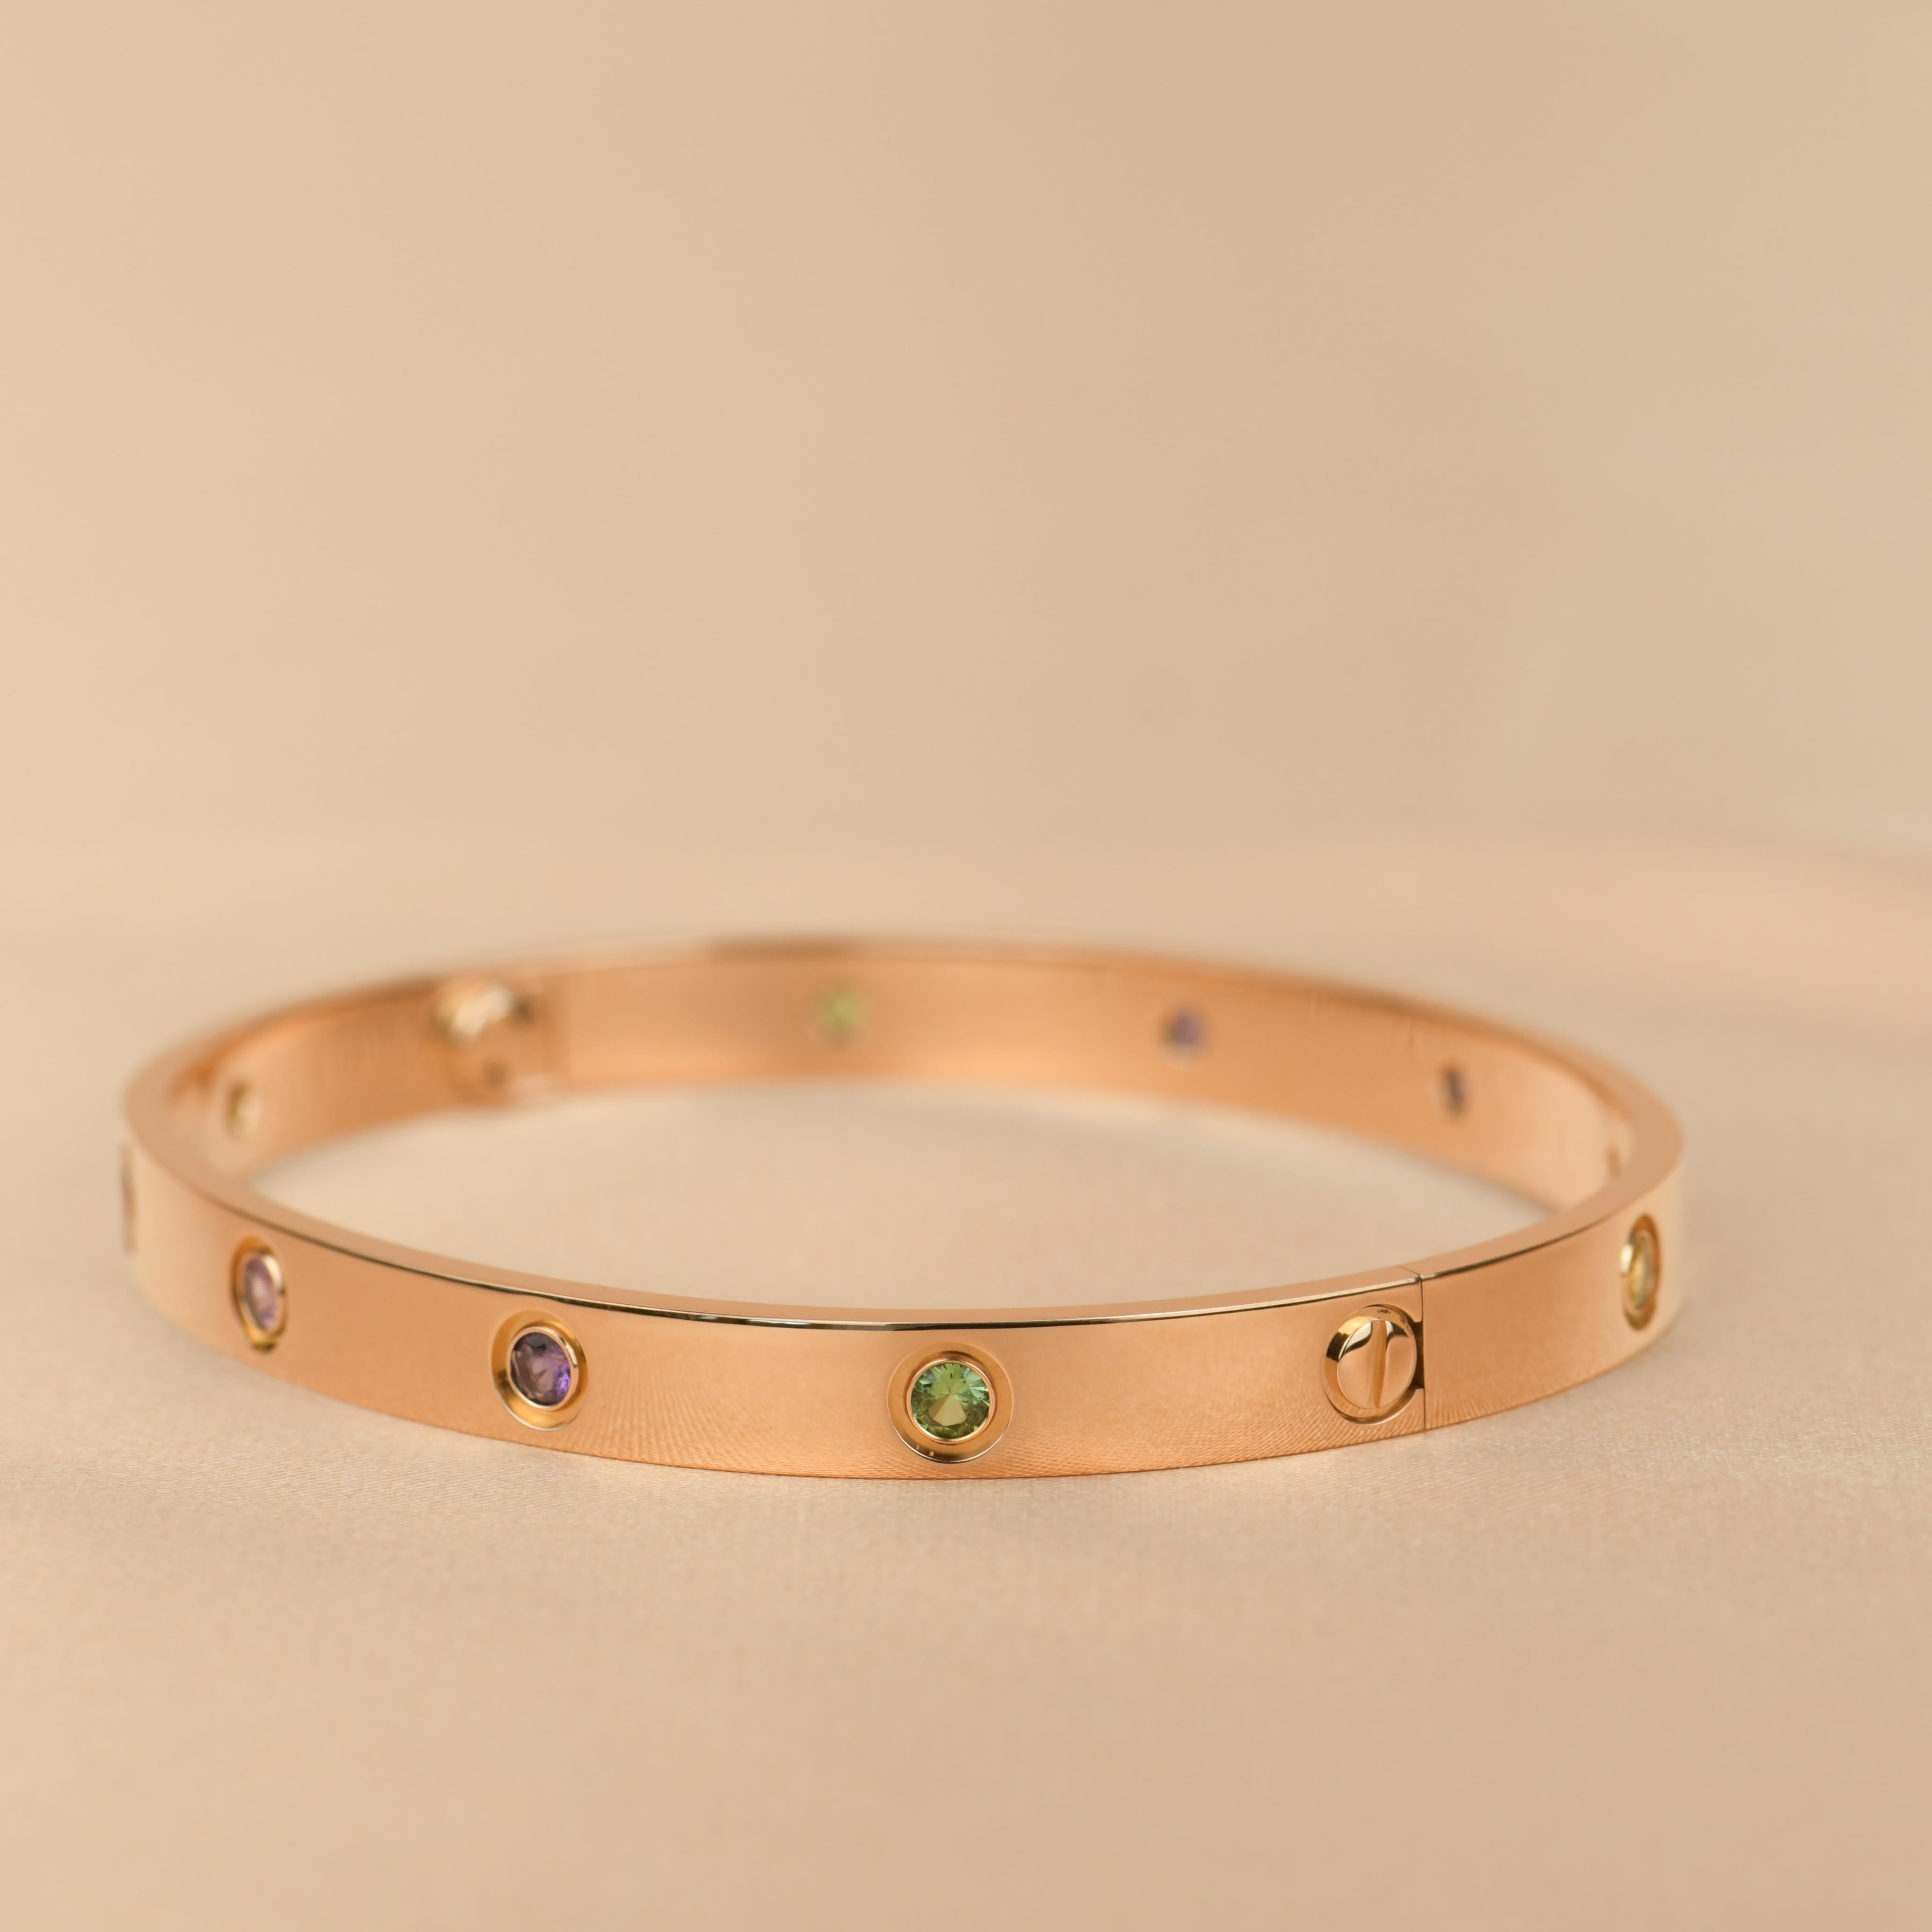 LOVE bracelet, 18K rose gold, set with 2 pink sapphires, 2 yellow sapphires, 2 green garnets, 2 orange garnets, and 2 amethysts. 
_____________________________________________________________
Dandelion Antiques Code AT-1159
Brand Cartier
Model